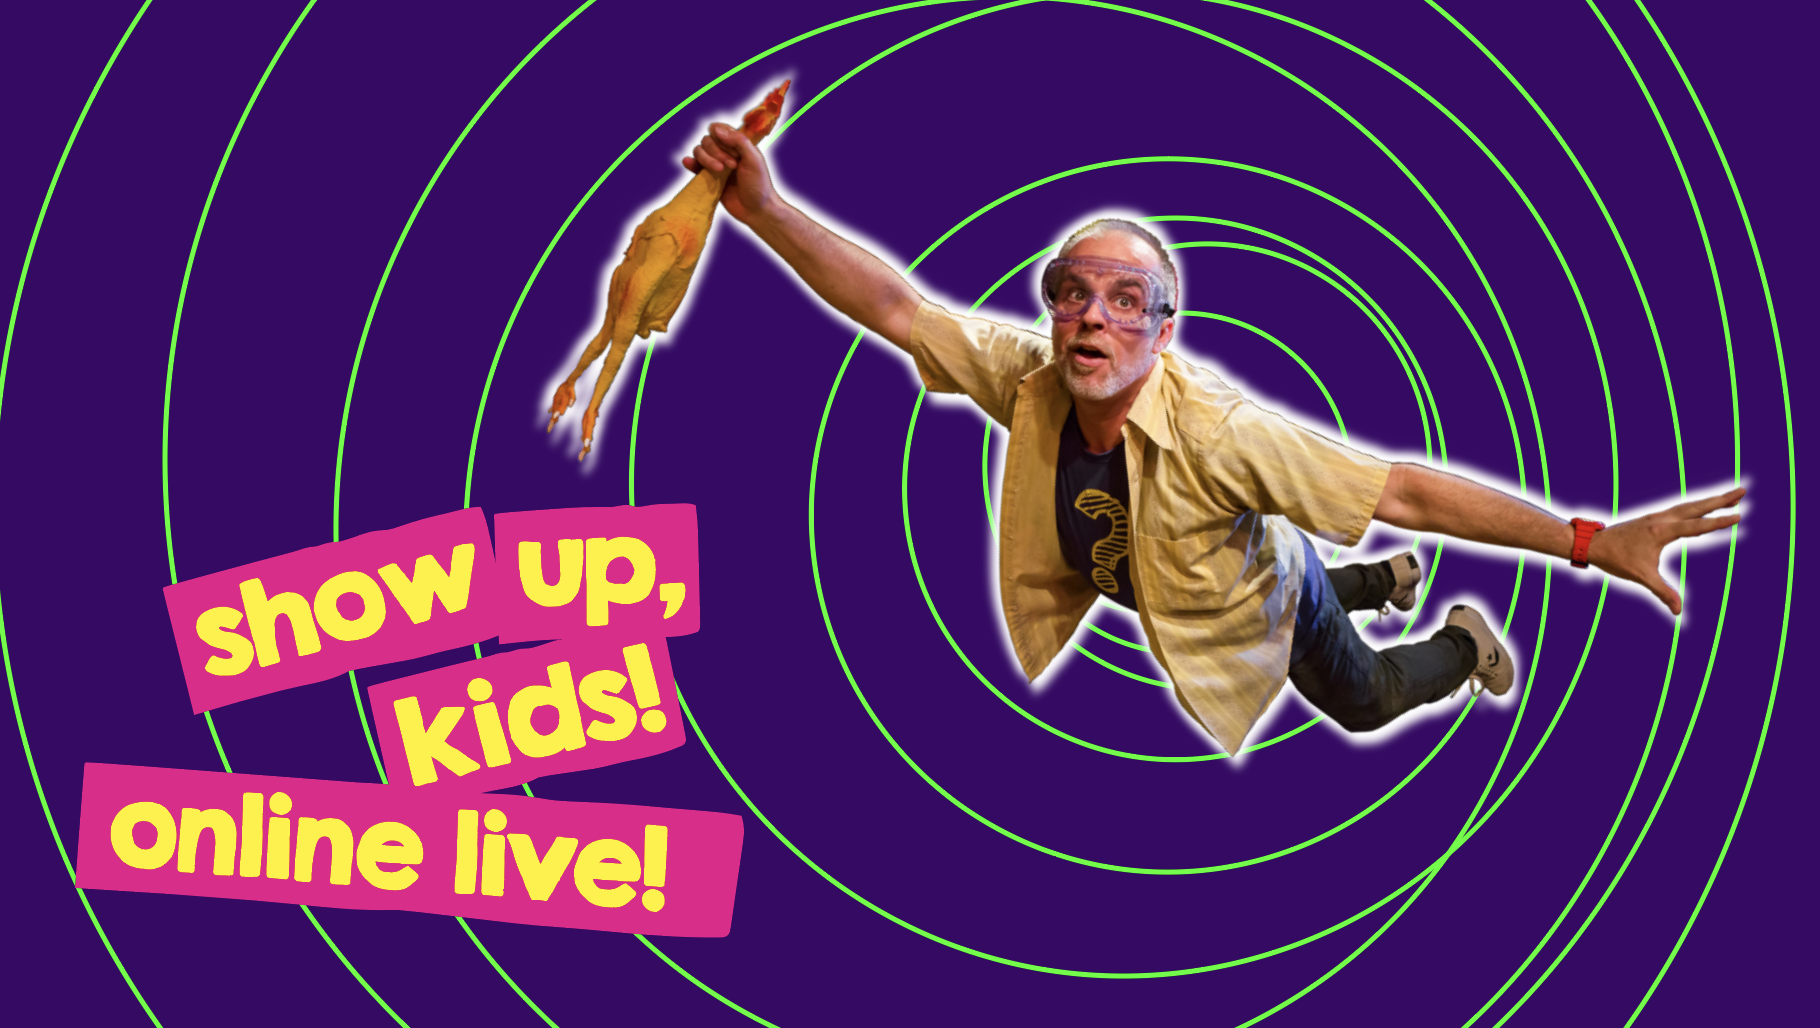 Show Up, Kids! Online LIVE!